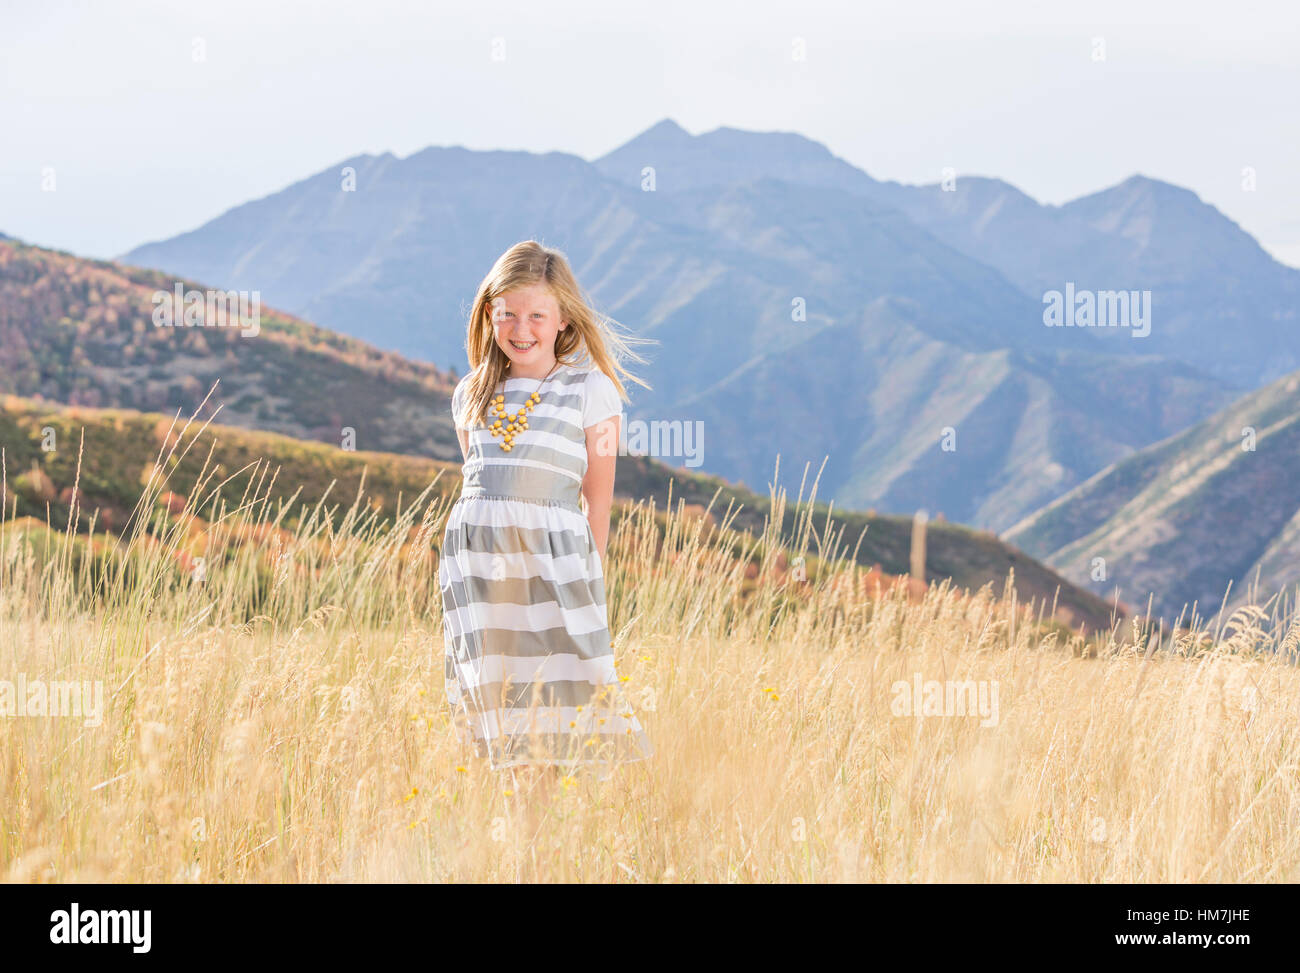 USA, Utah, Provo, Girl (8-9) standing in field Stock Photo